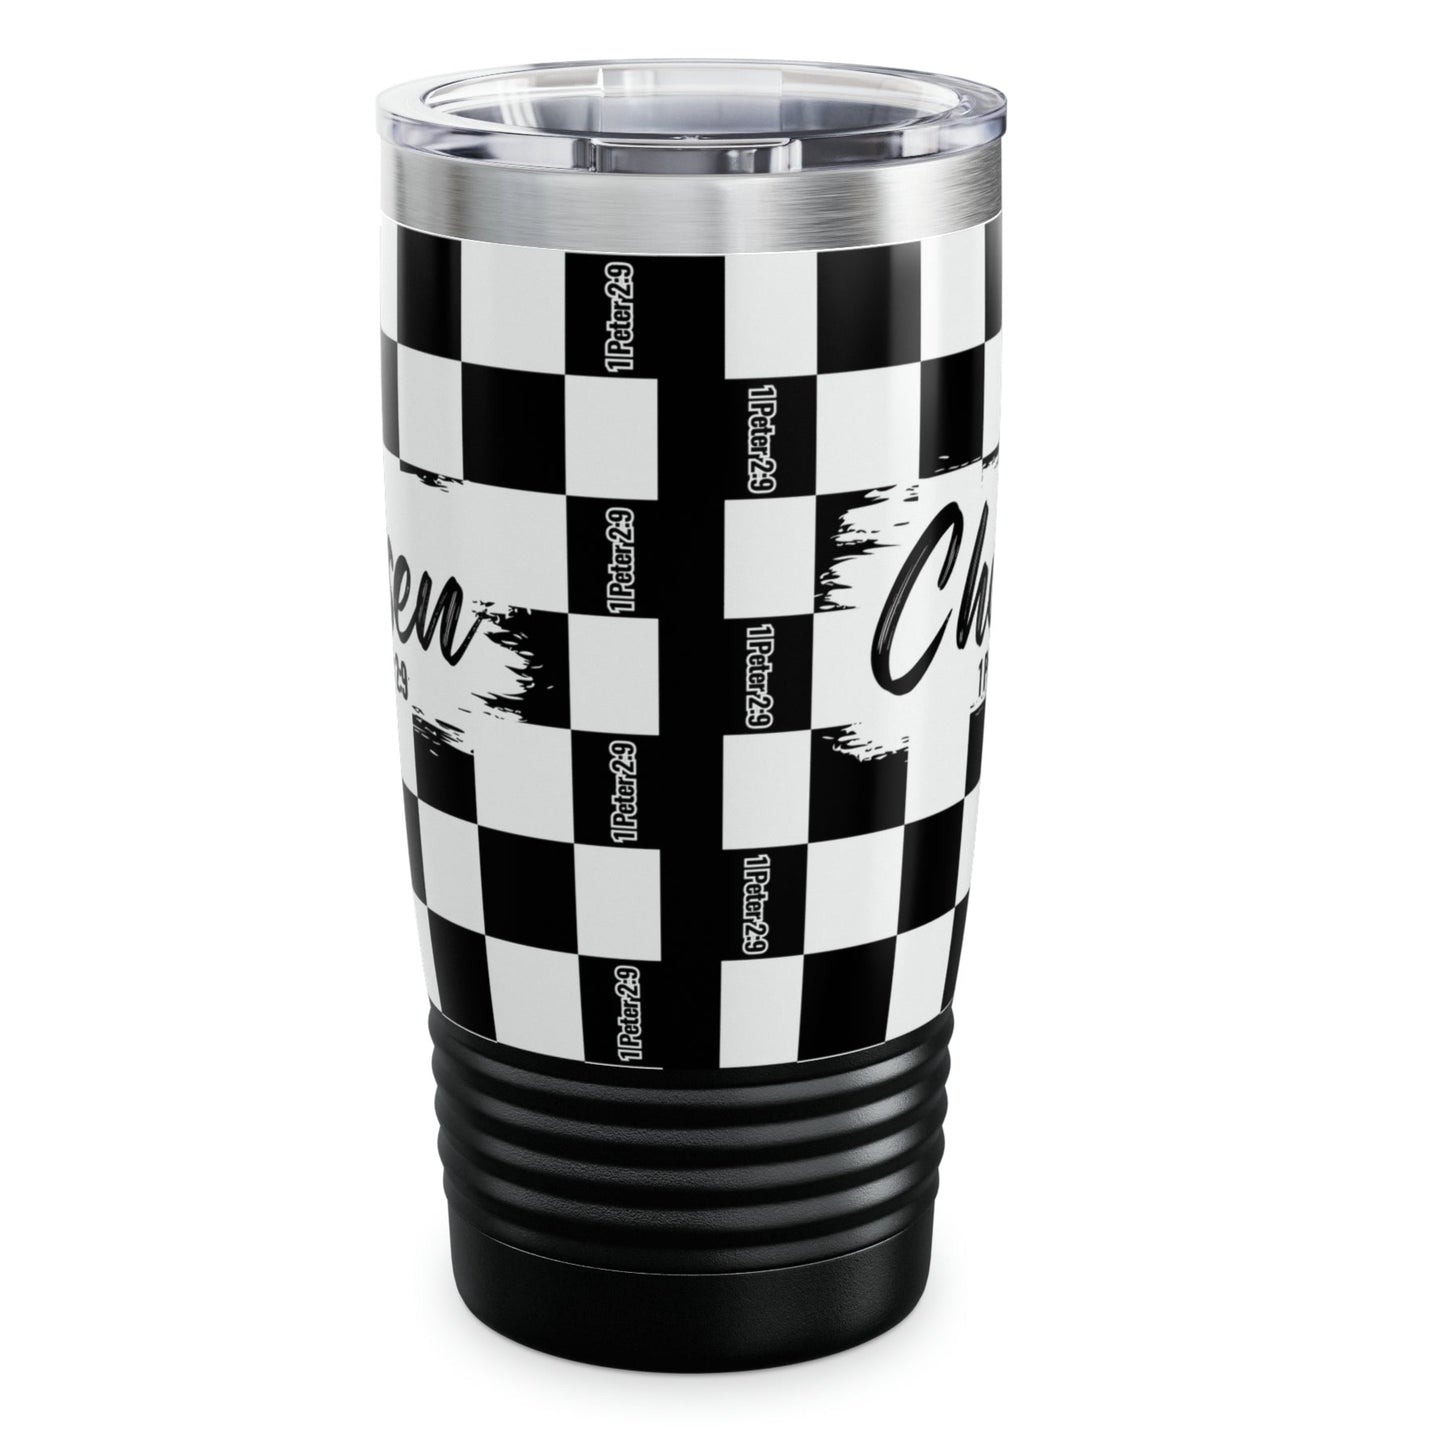 Chosen Checkerboard Tumbler Mug